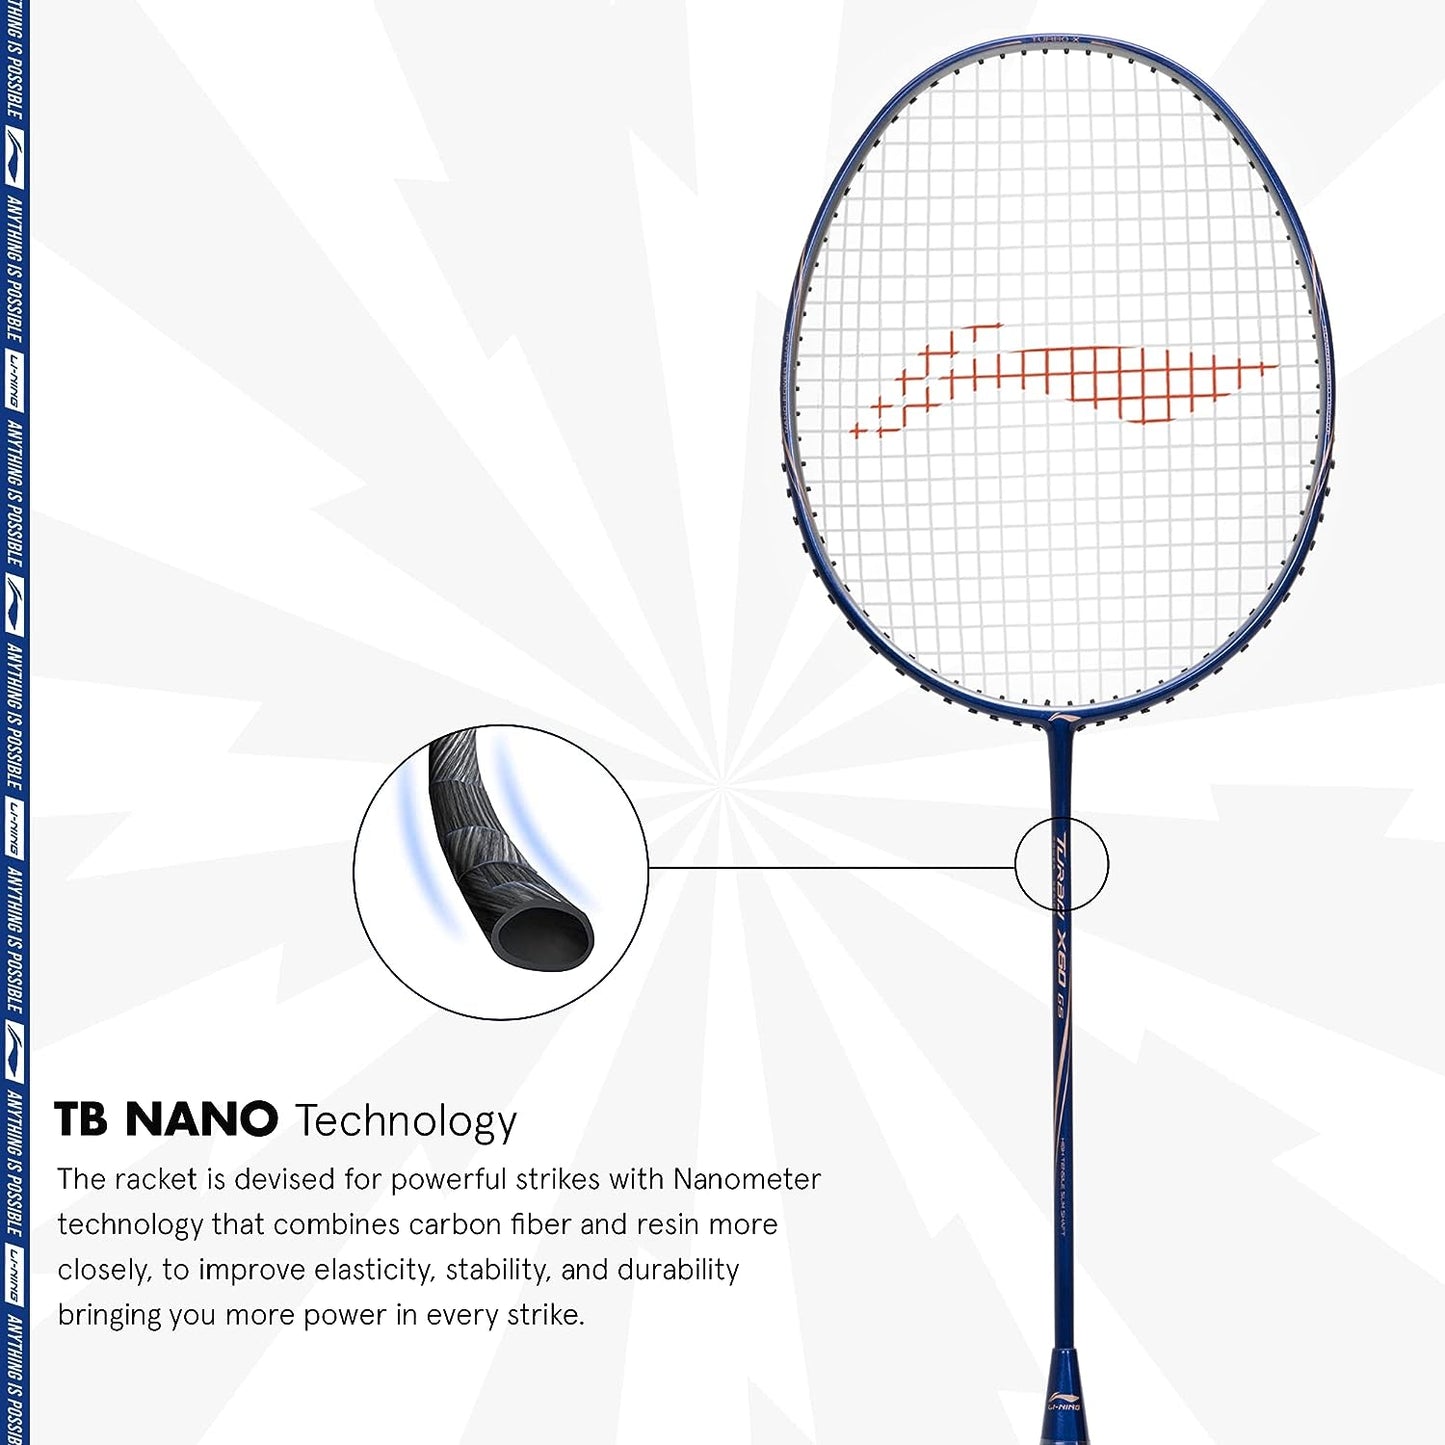 Li-Ning Turbo X60 G5 Power Series Badminton Racquet - Best Price online Prokicksports.com